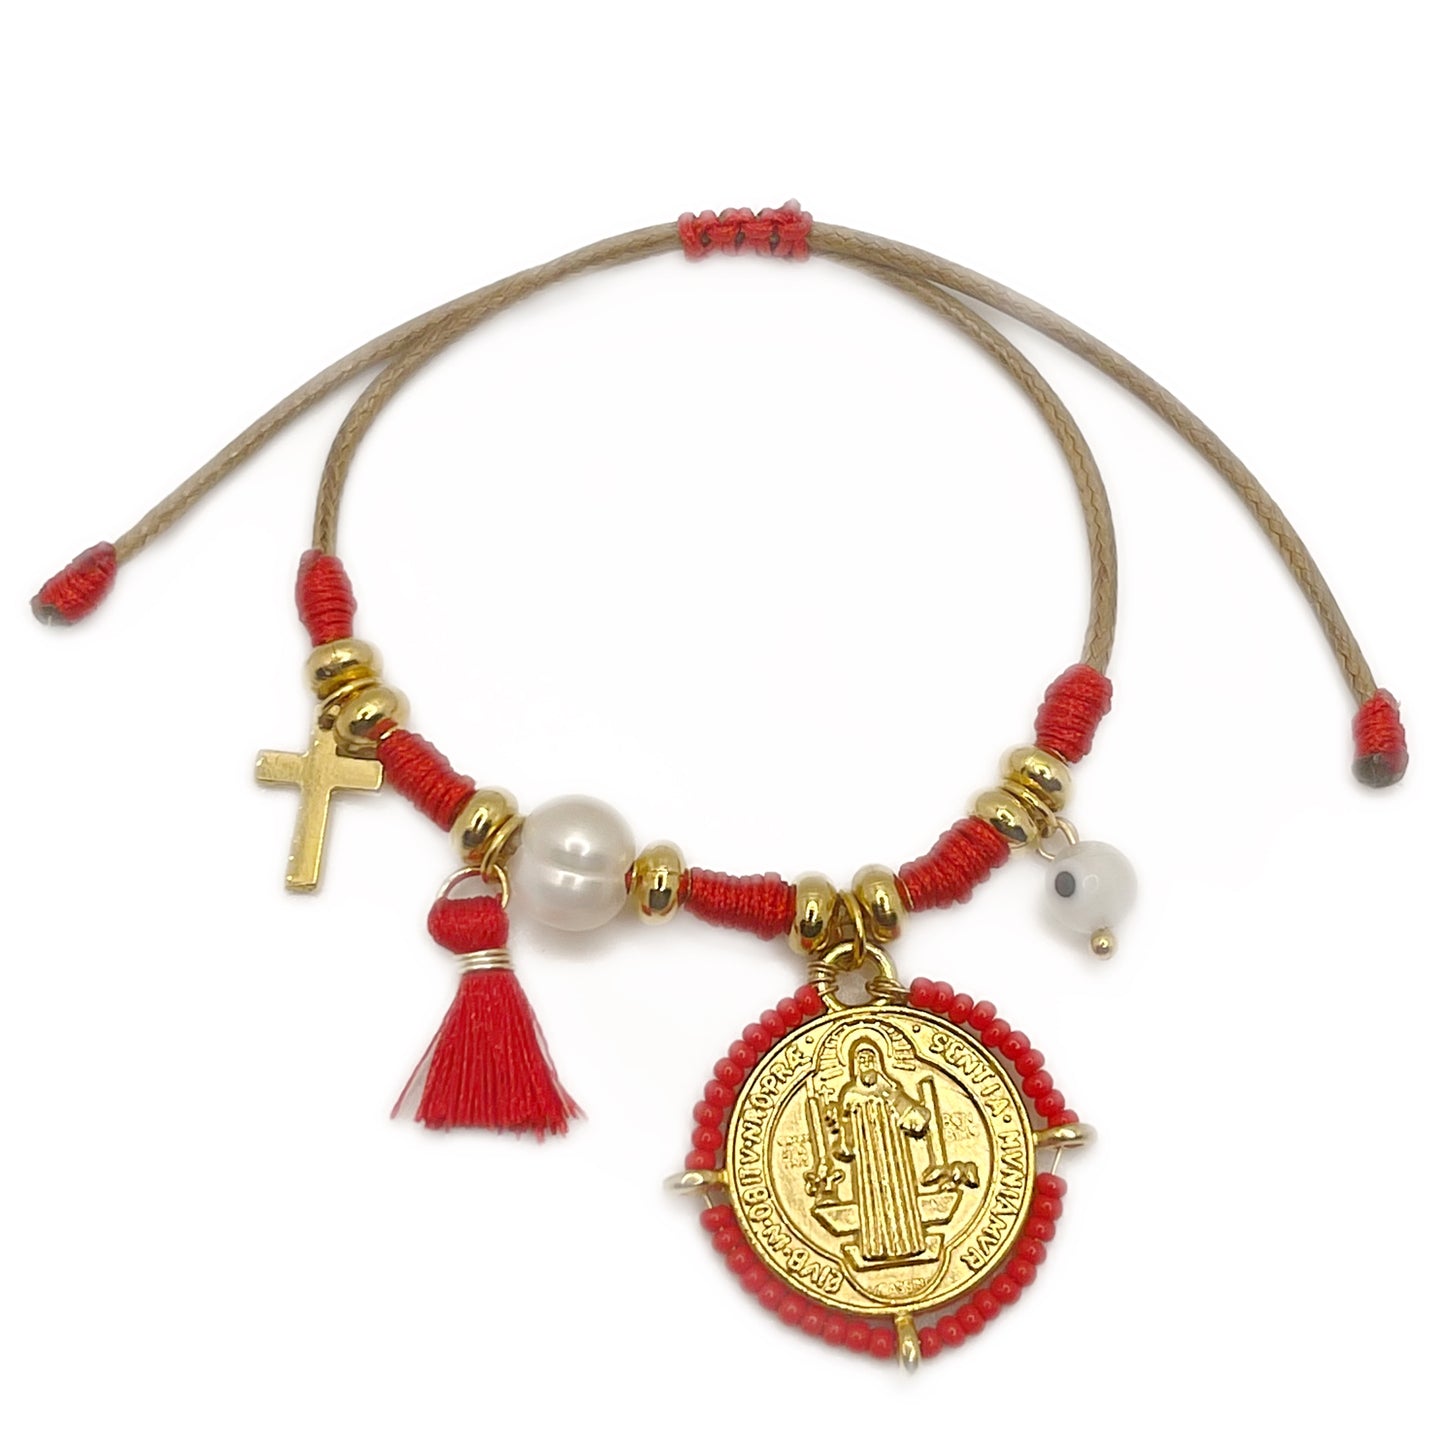 Saint Benedict Protection bracelet (Click for more colors)